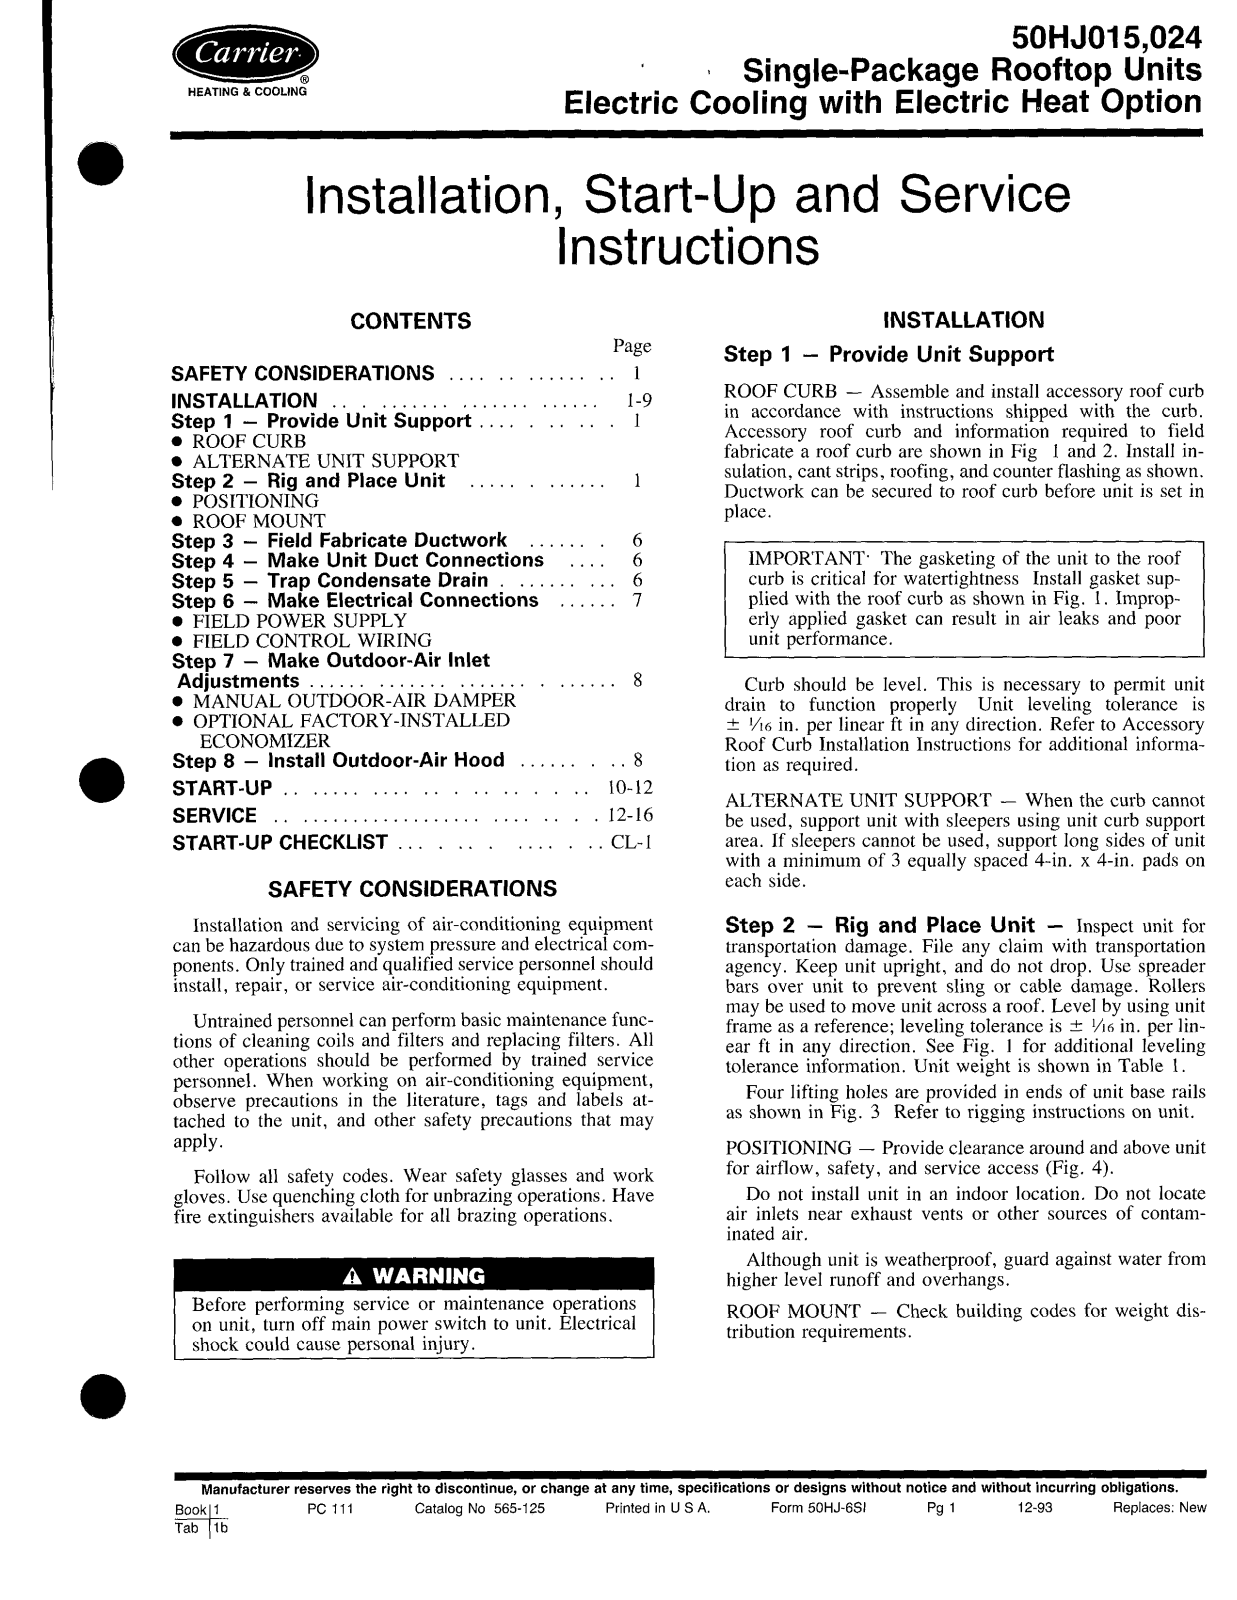 Carrier 24 User Manual